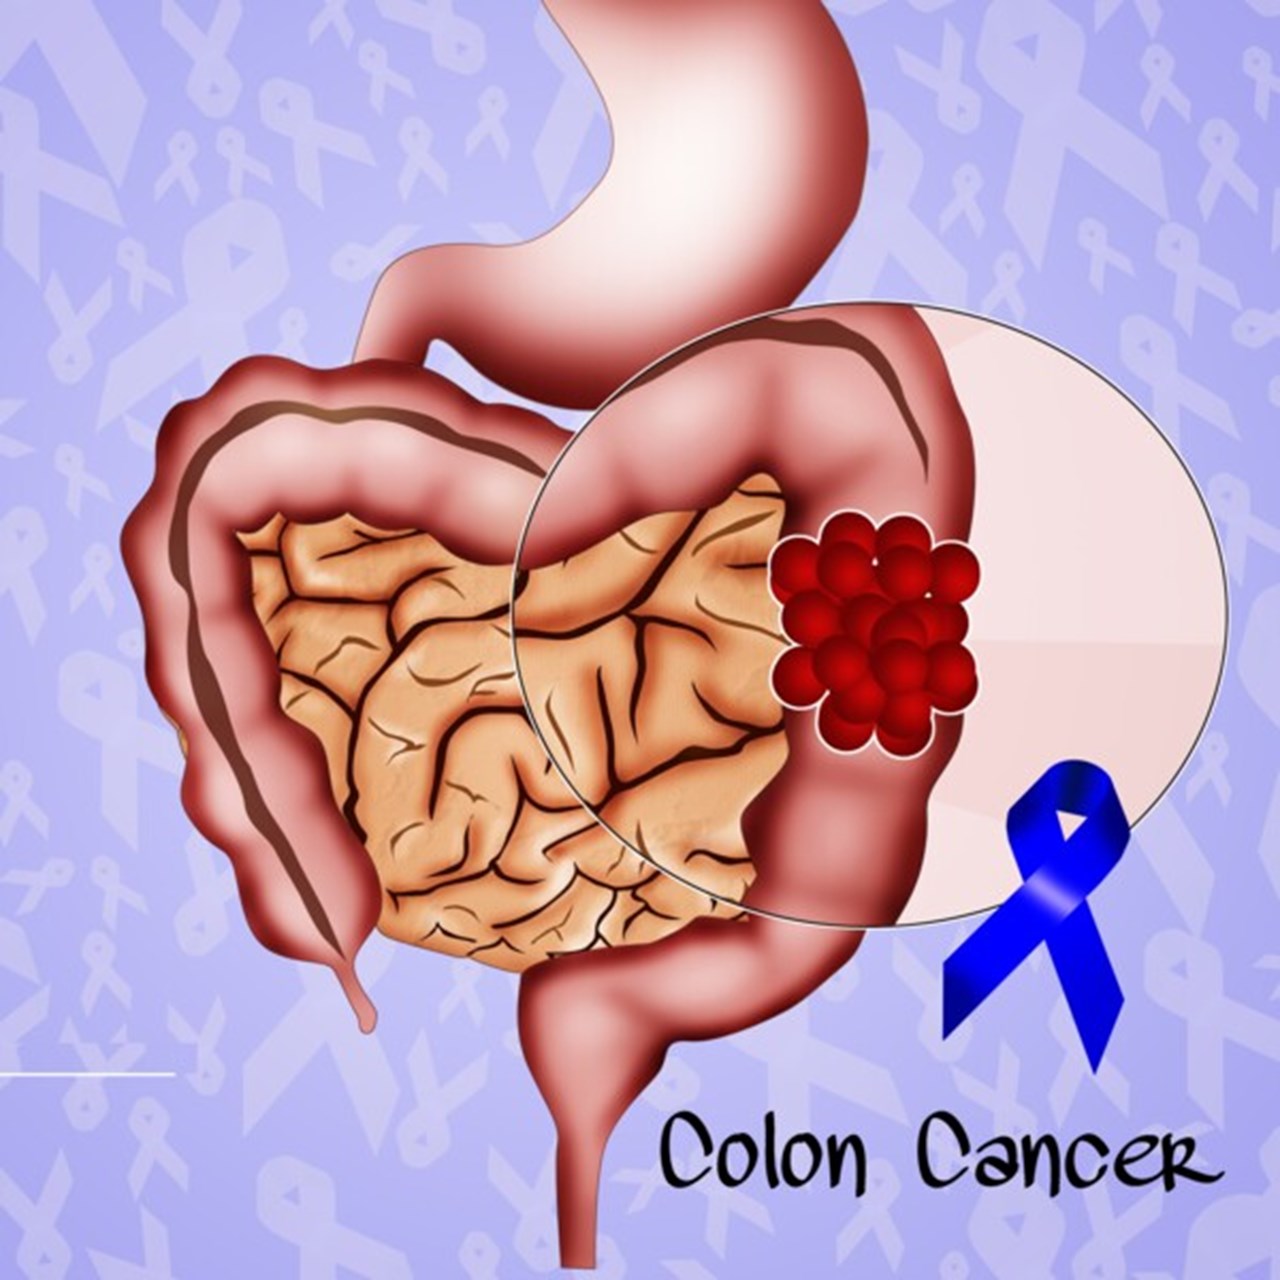 Kolorektalcancer, schematisk illustration av cancer i tjocktarmen